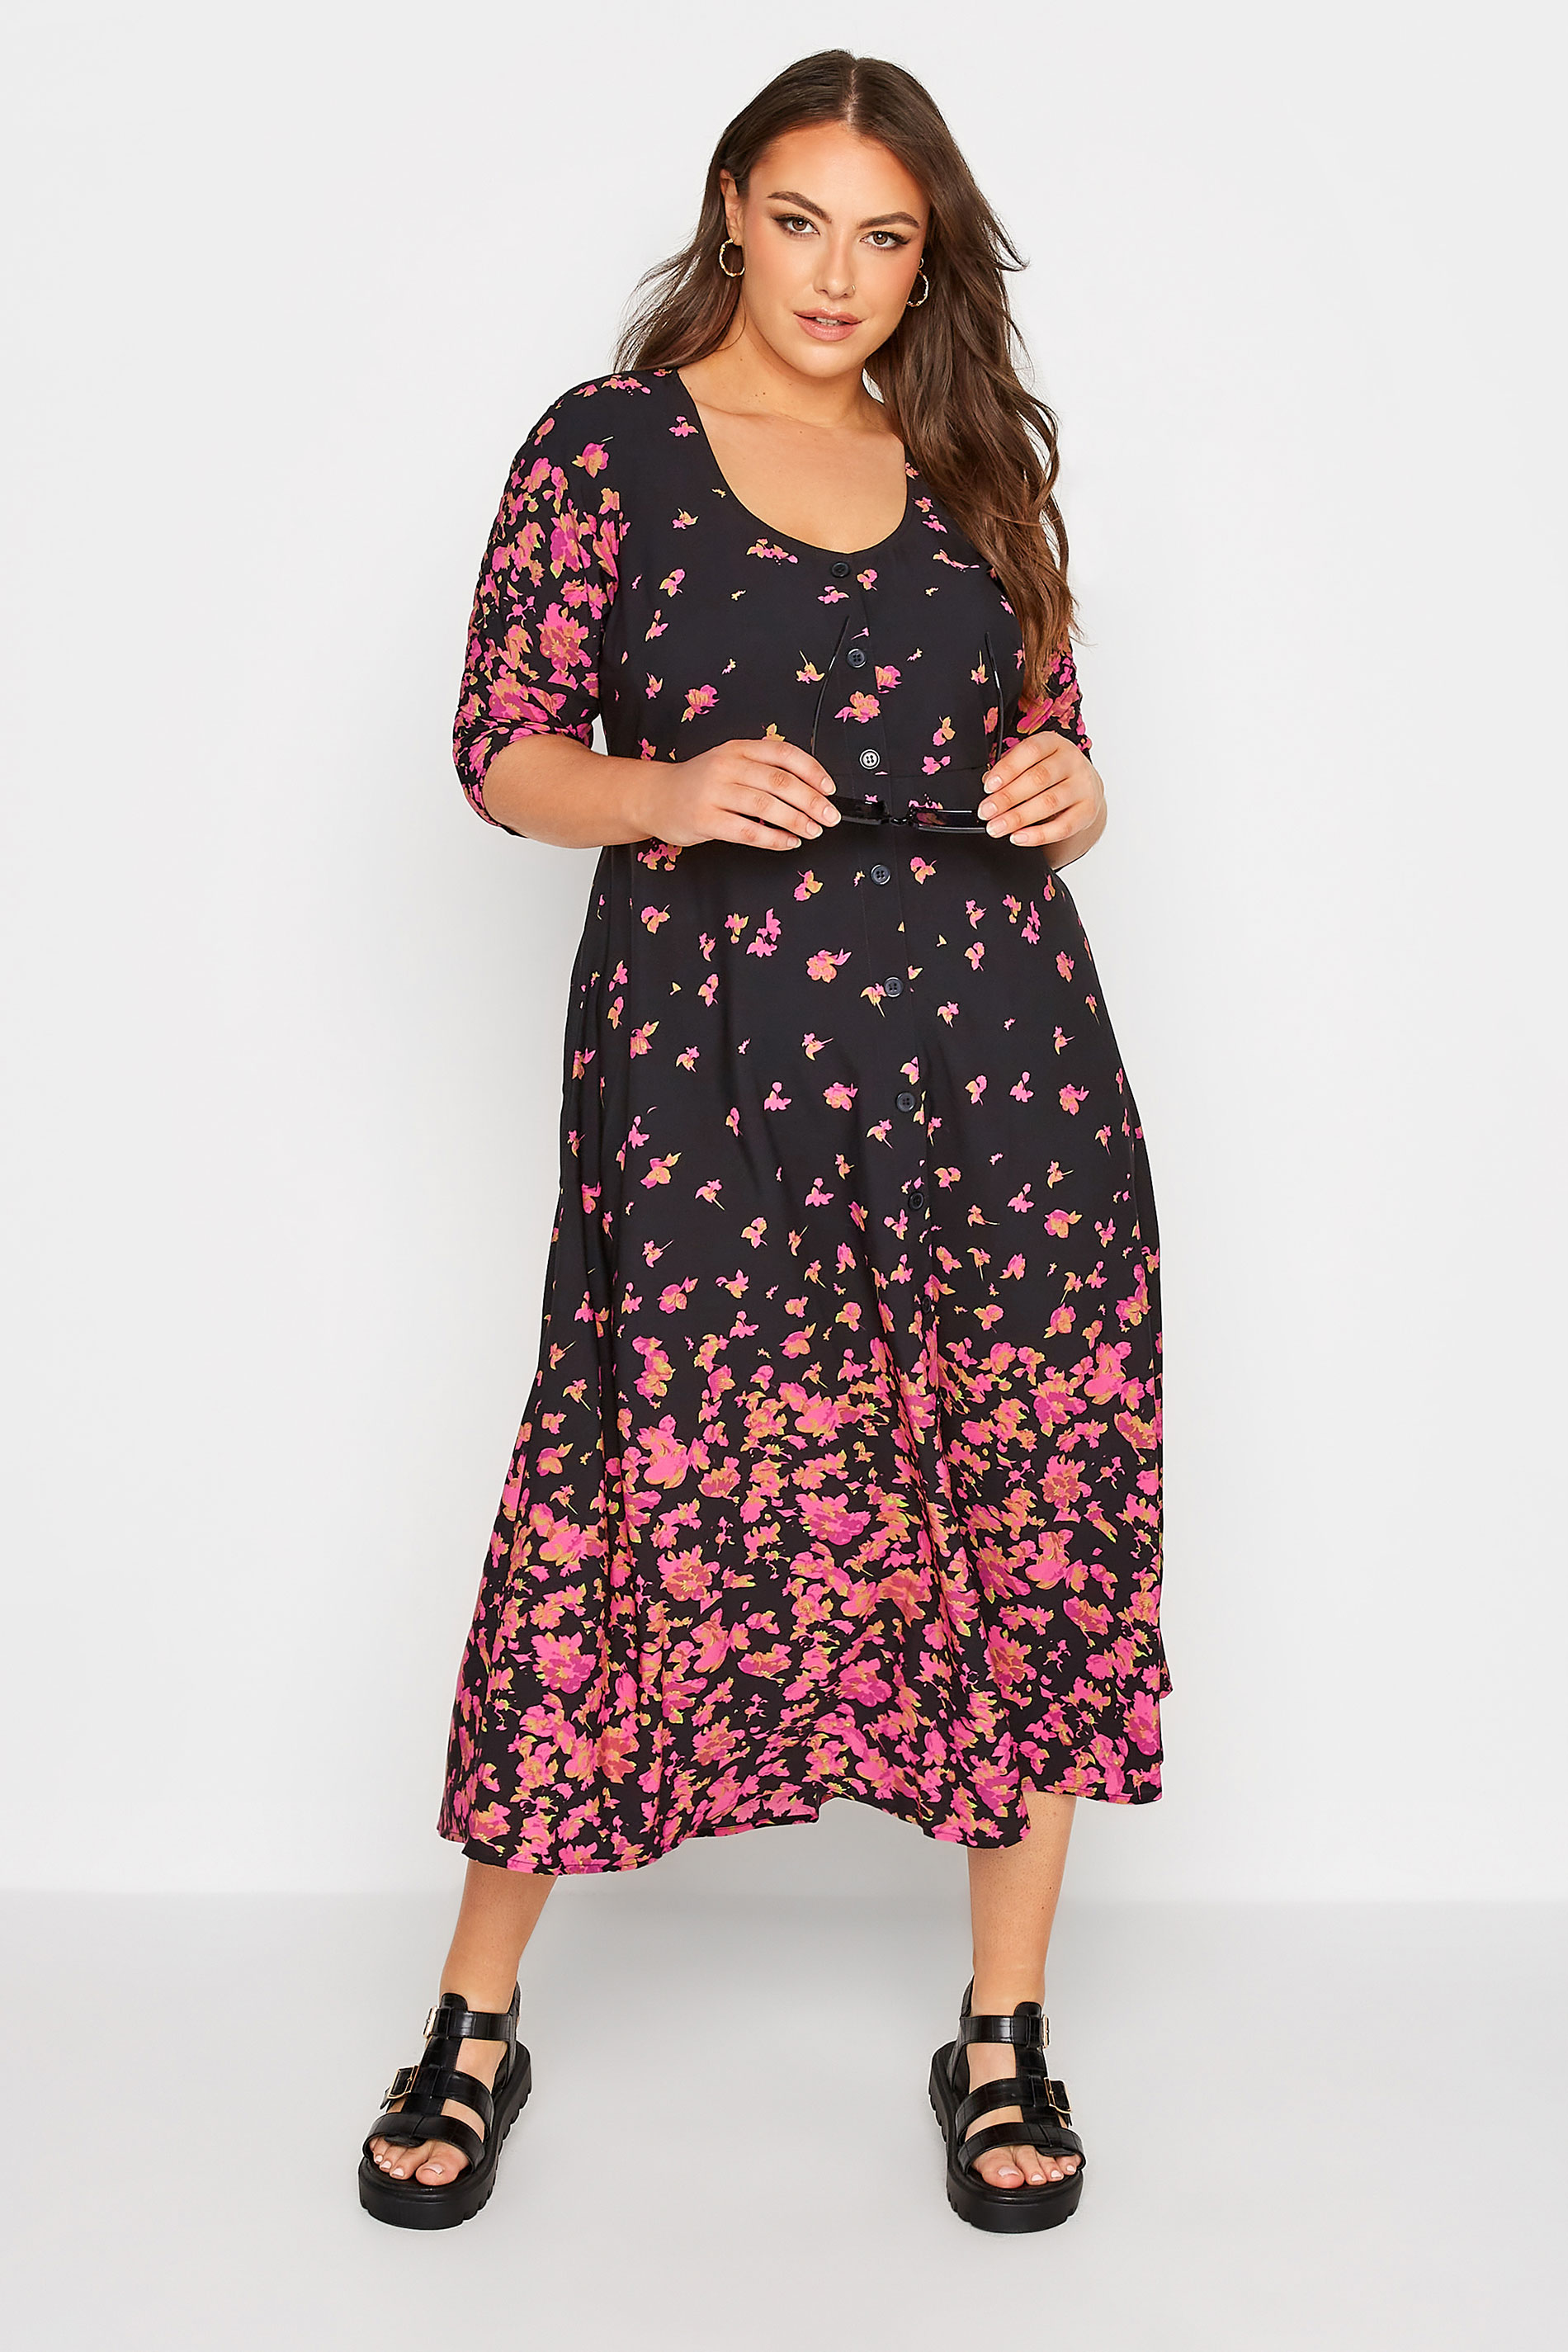 Robes Grande Taille Grande taille  Robes Imprimé Floral | LIMITED COLLECTION - Tea Dress Noire Bordures Floral Rose - KA29185